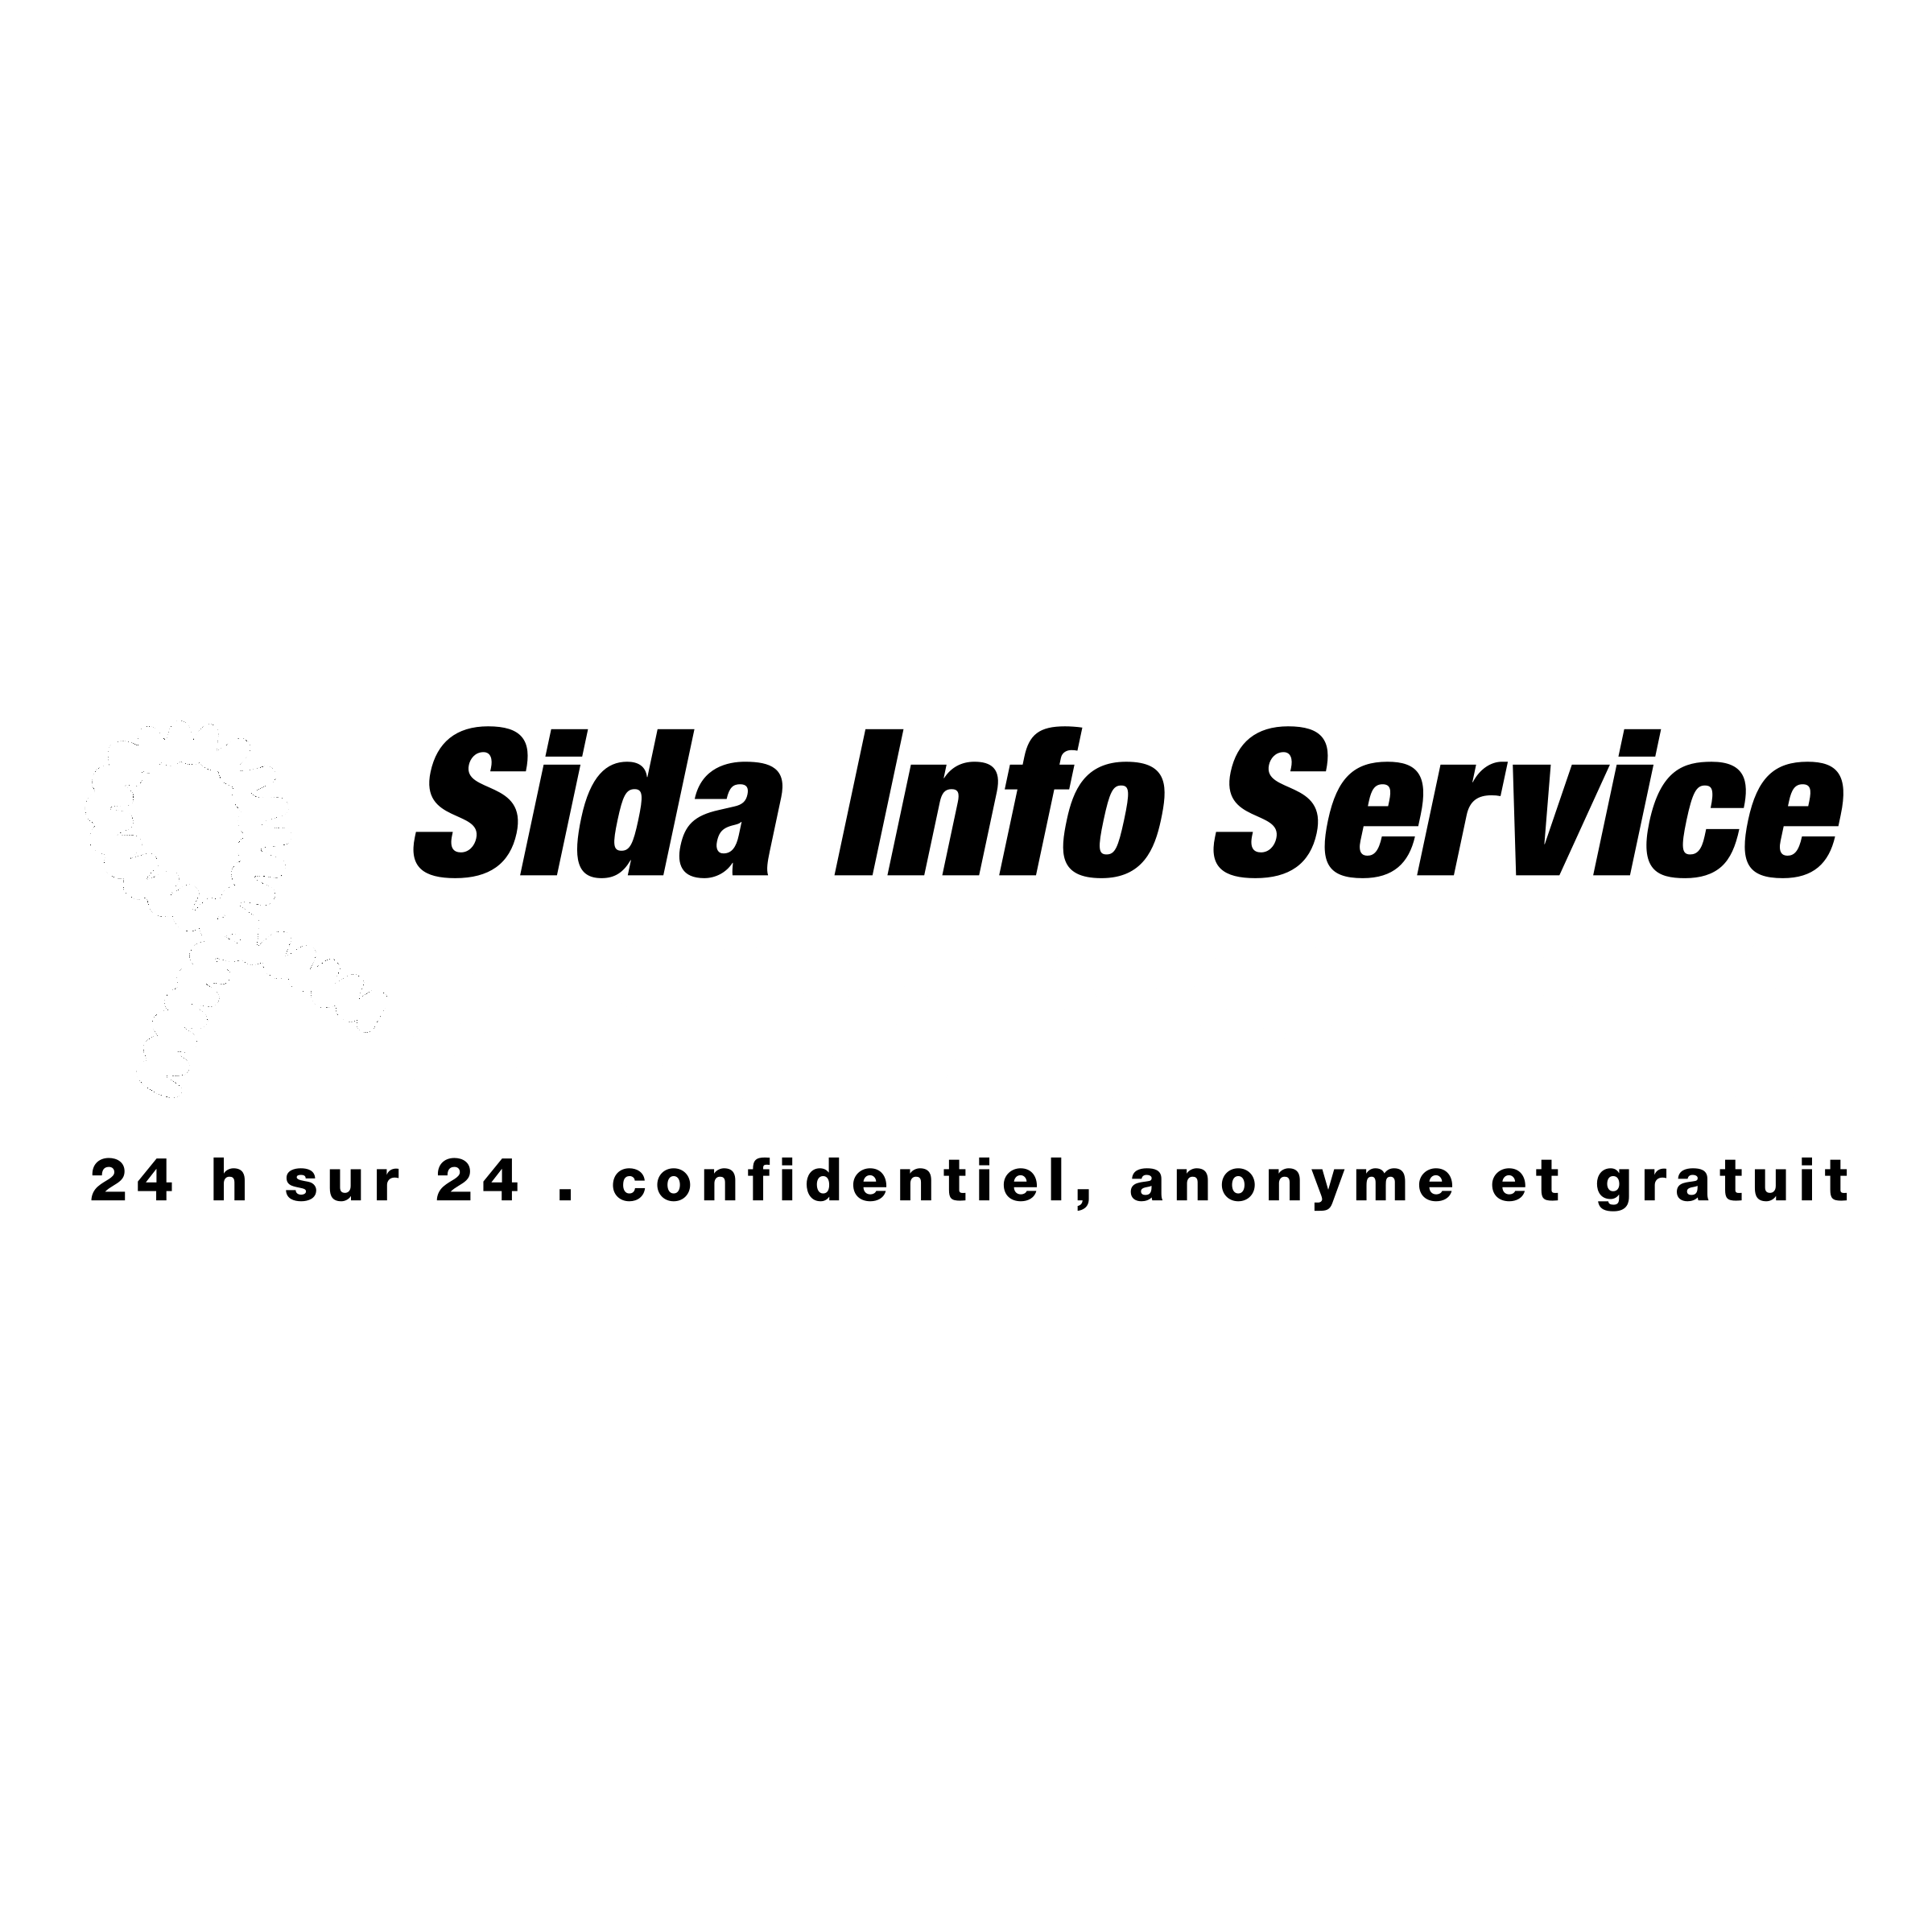 Sida Logo - Sida Info Service Logo PNG Transparent & SVG Vector - Freebie Supply